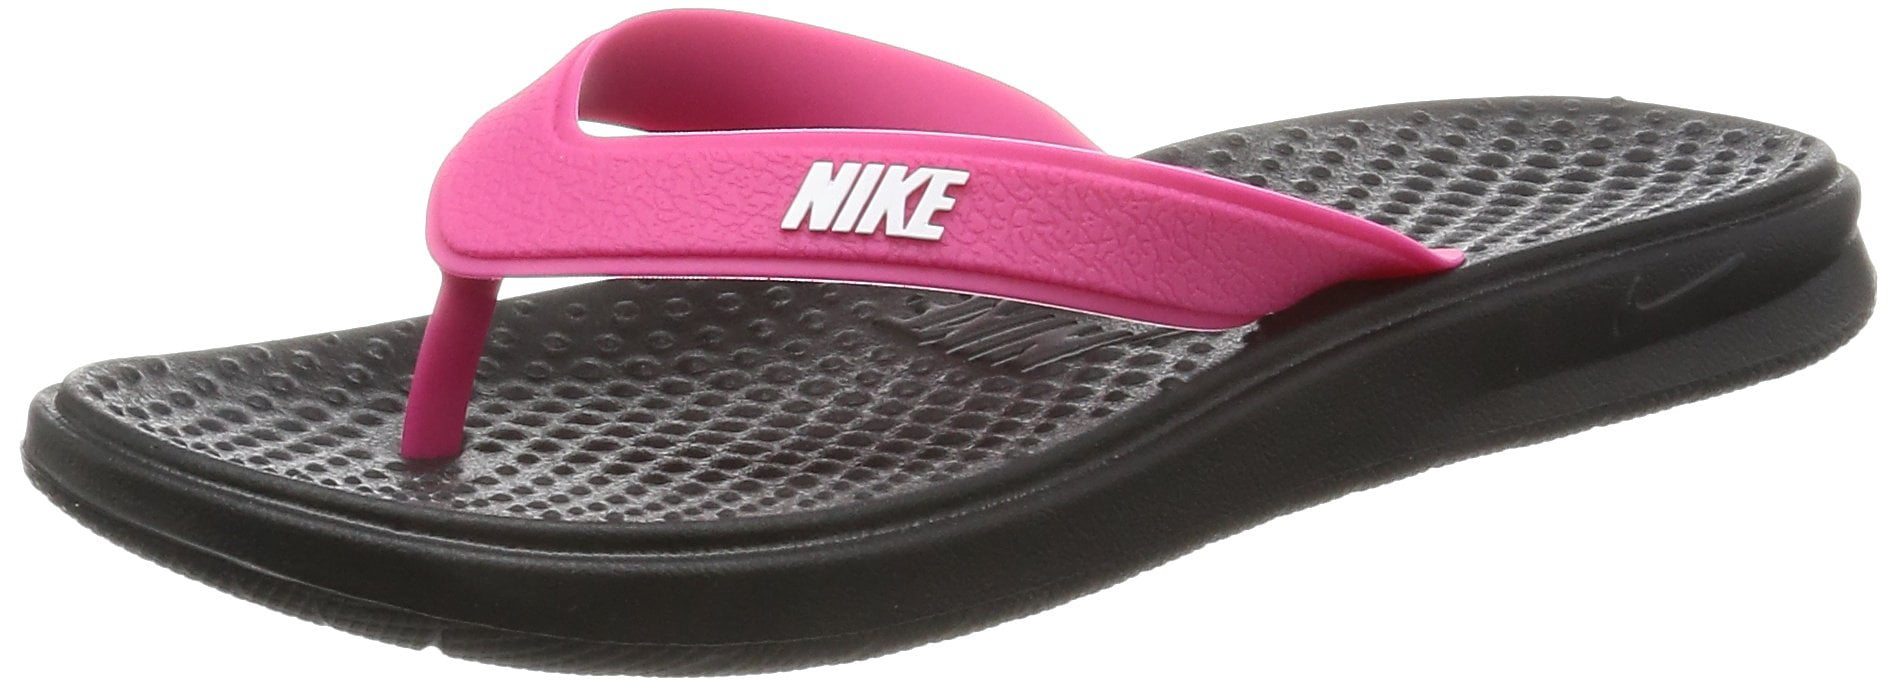 Nike - nike solay thong - women's - Walmart.com - Walmart.com